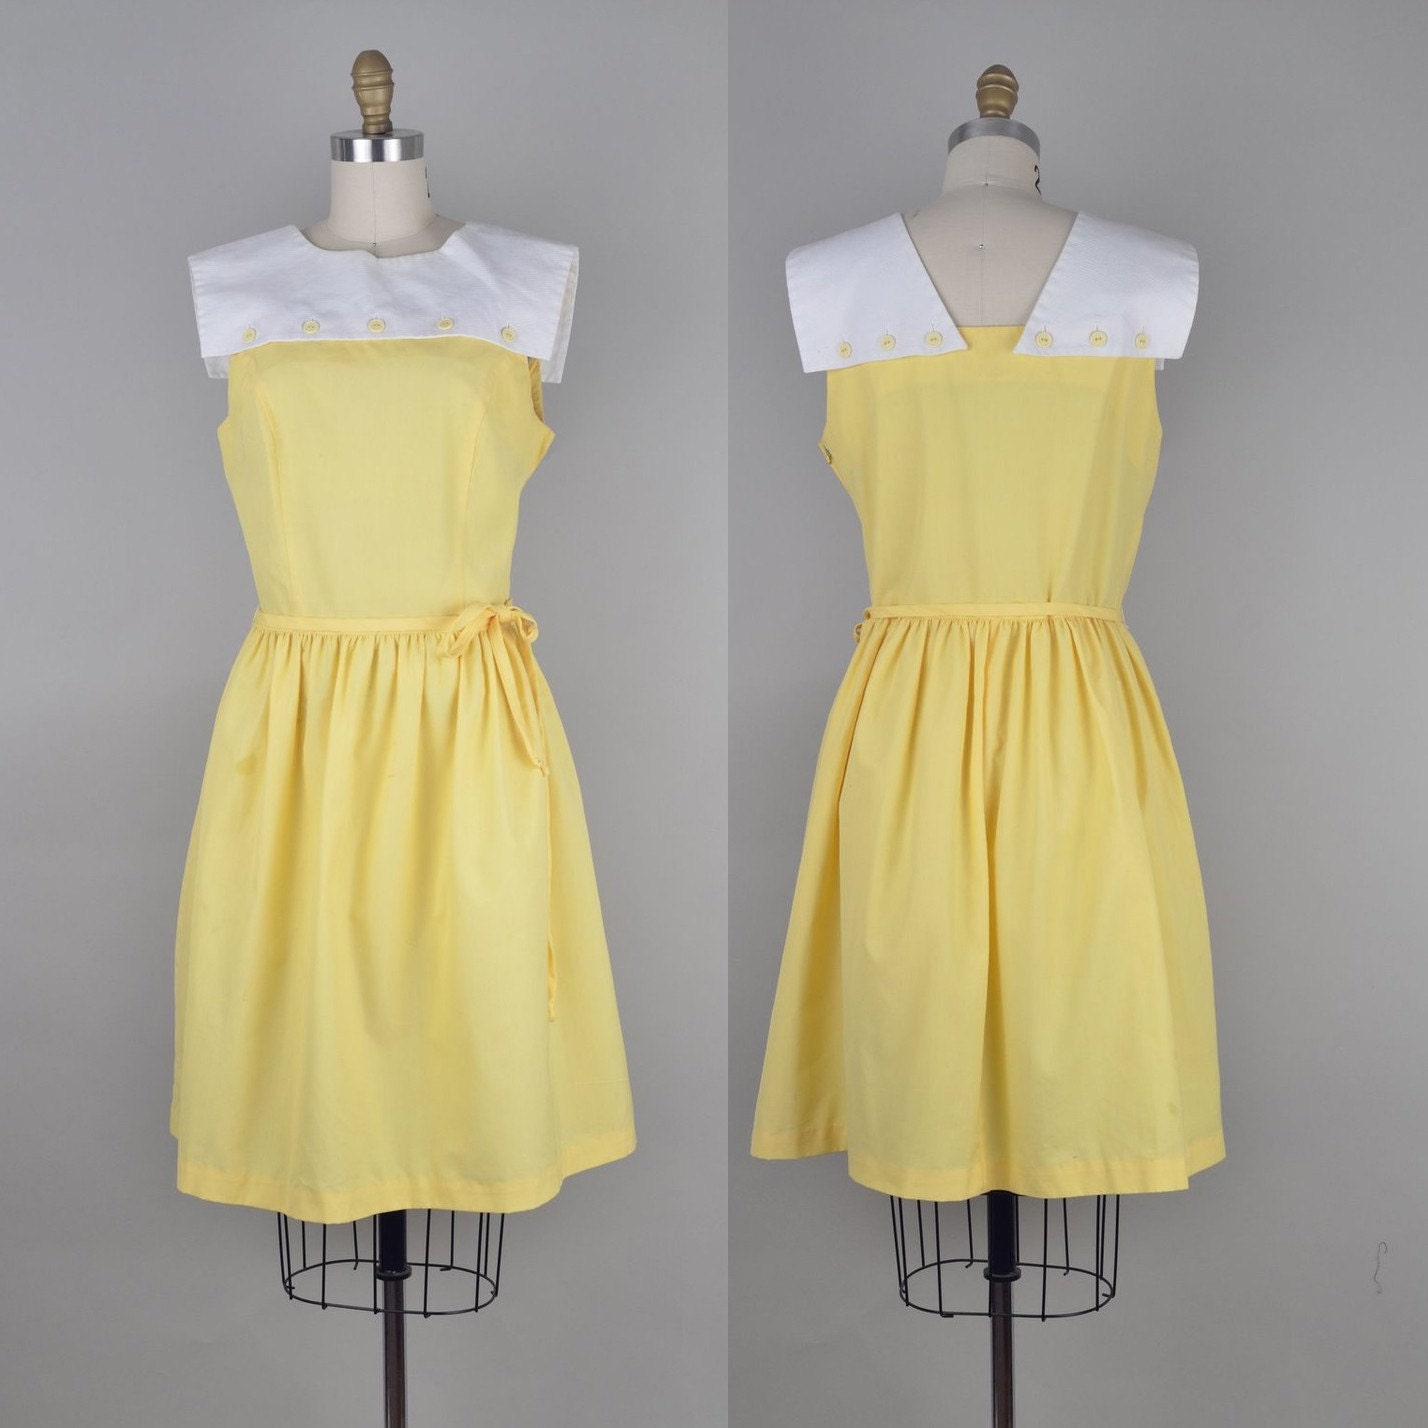 Vintage 1950s Yellow Sun Dress with White Sailor Collar